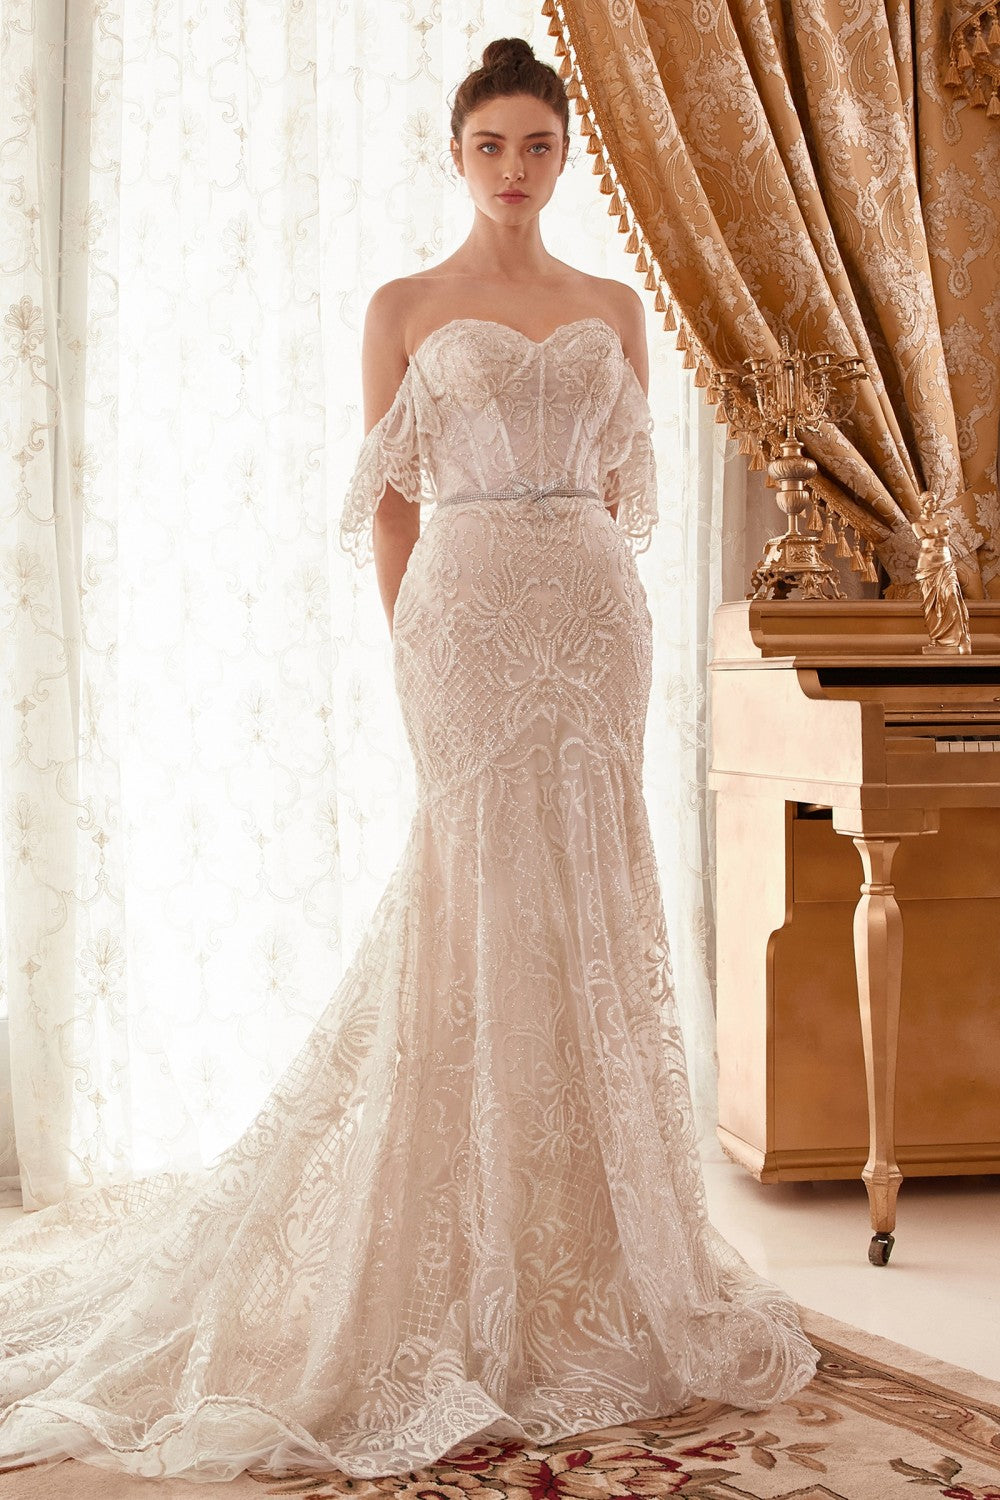 New model special lace wedding dress royal bridal dress - AliExpress